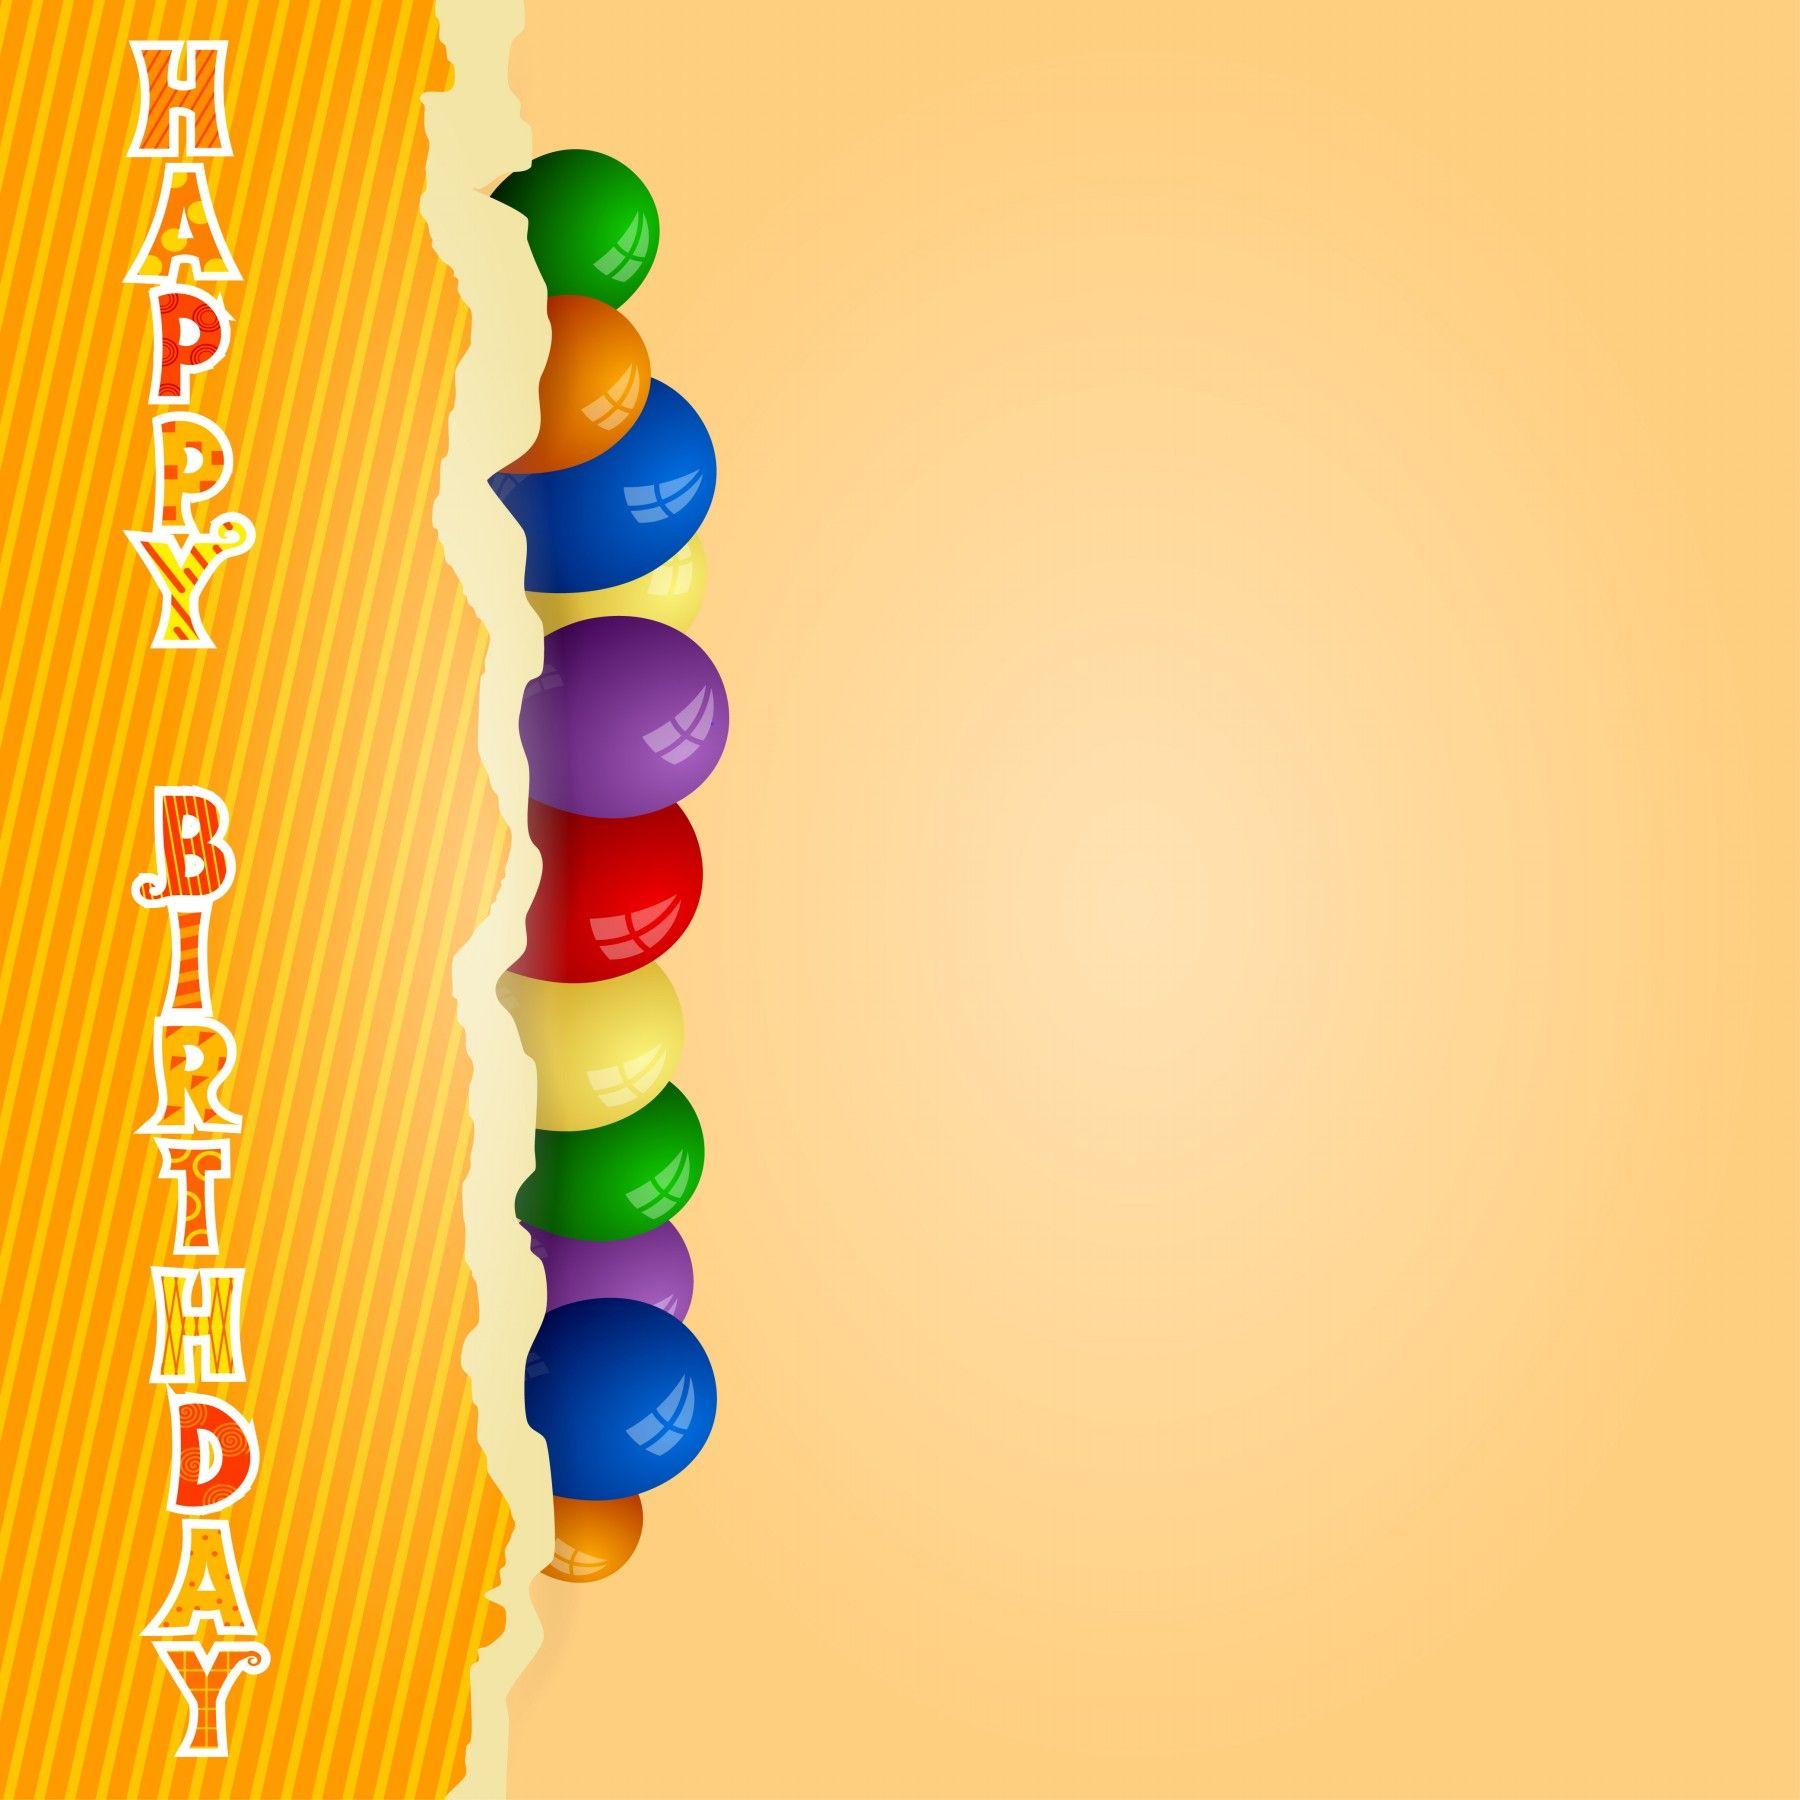 15) Happy Birthday Cards, New Designs • Elsoar